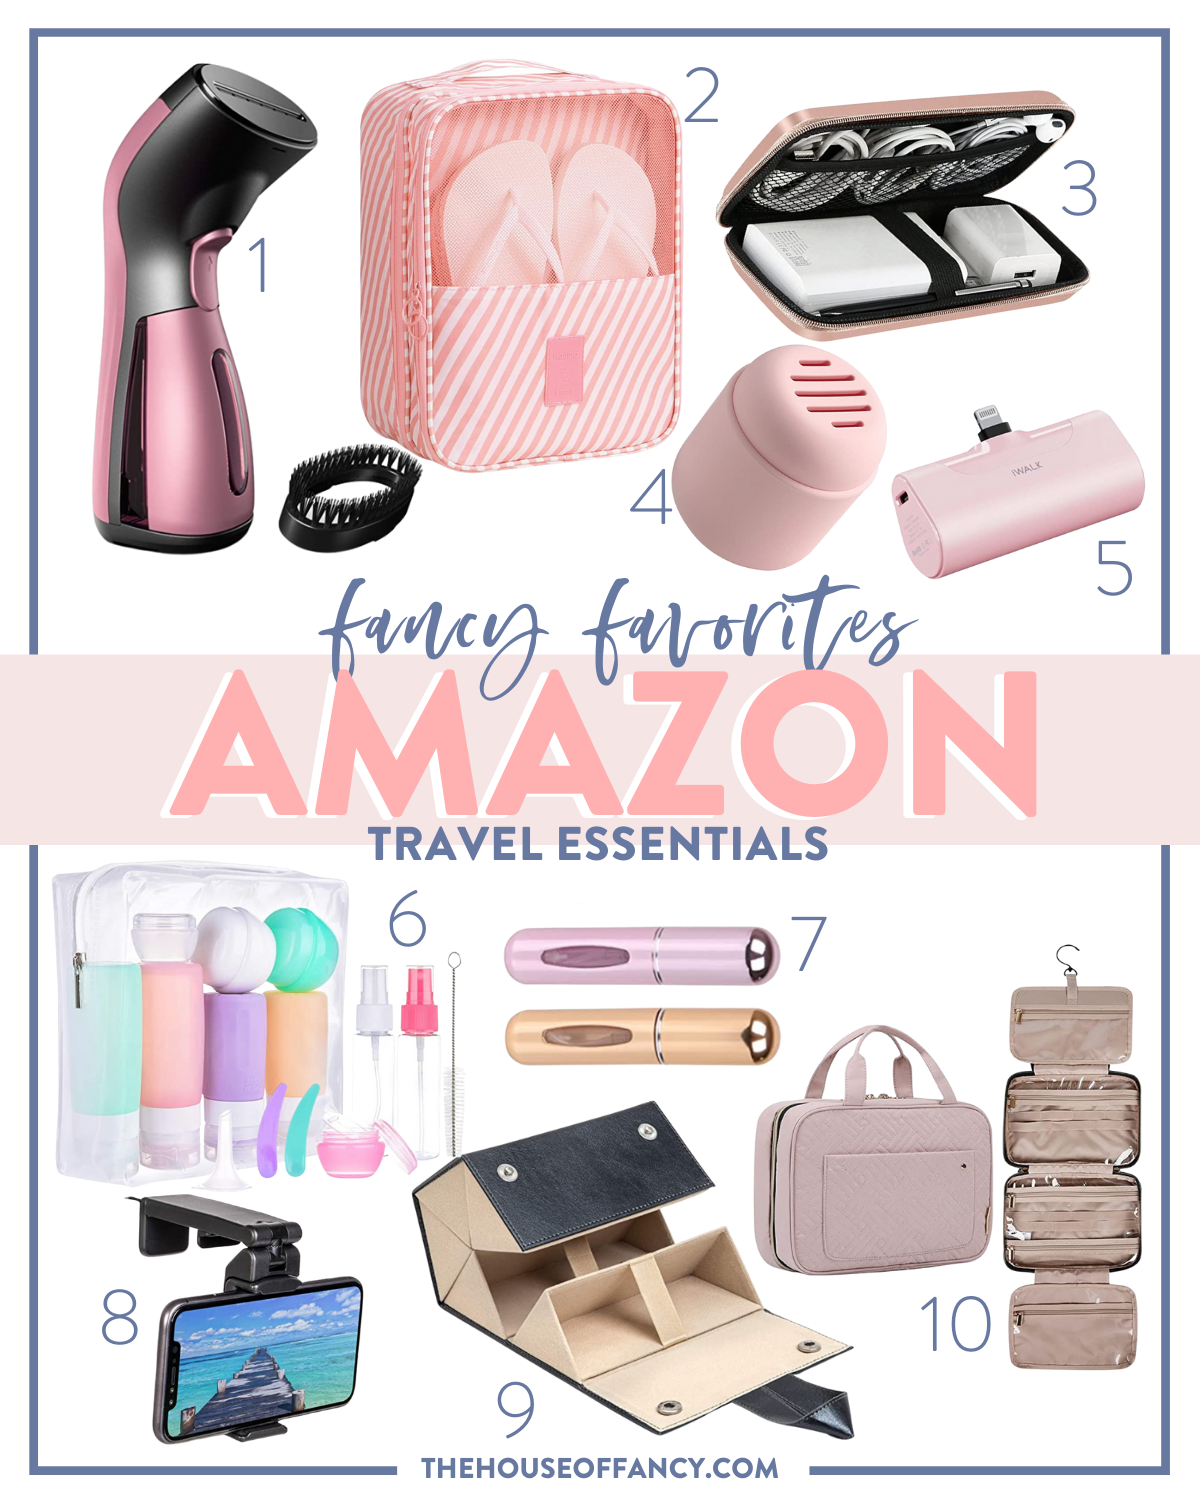 Amazon Travel Essentials - House of Fancy